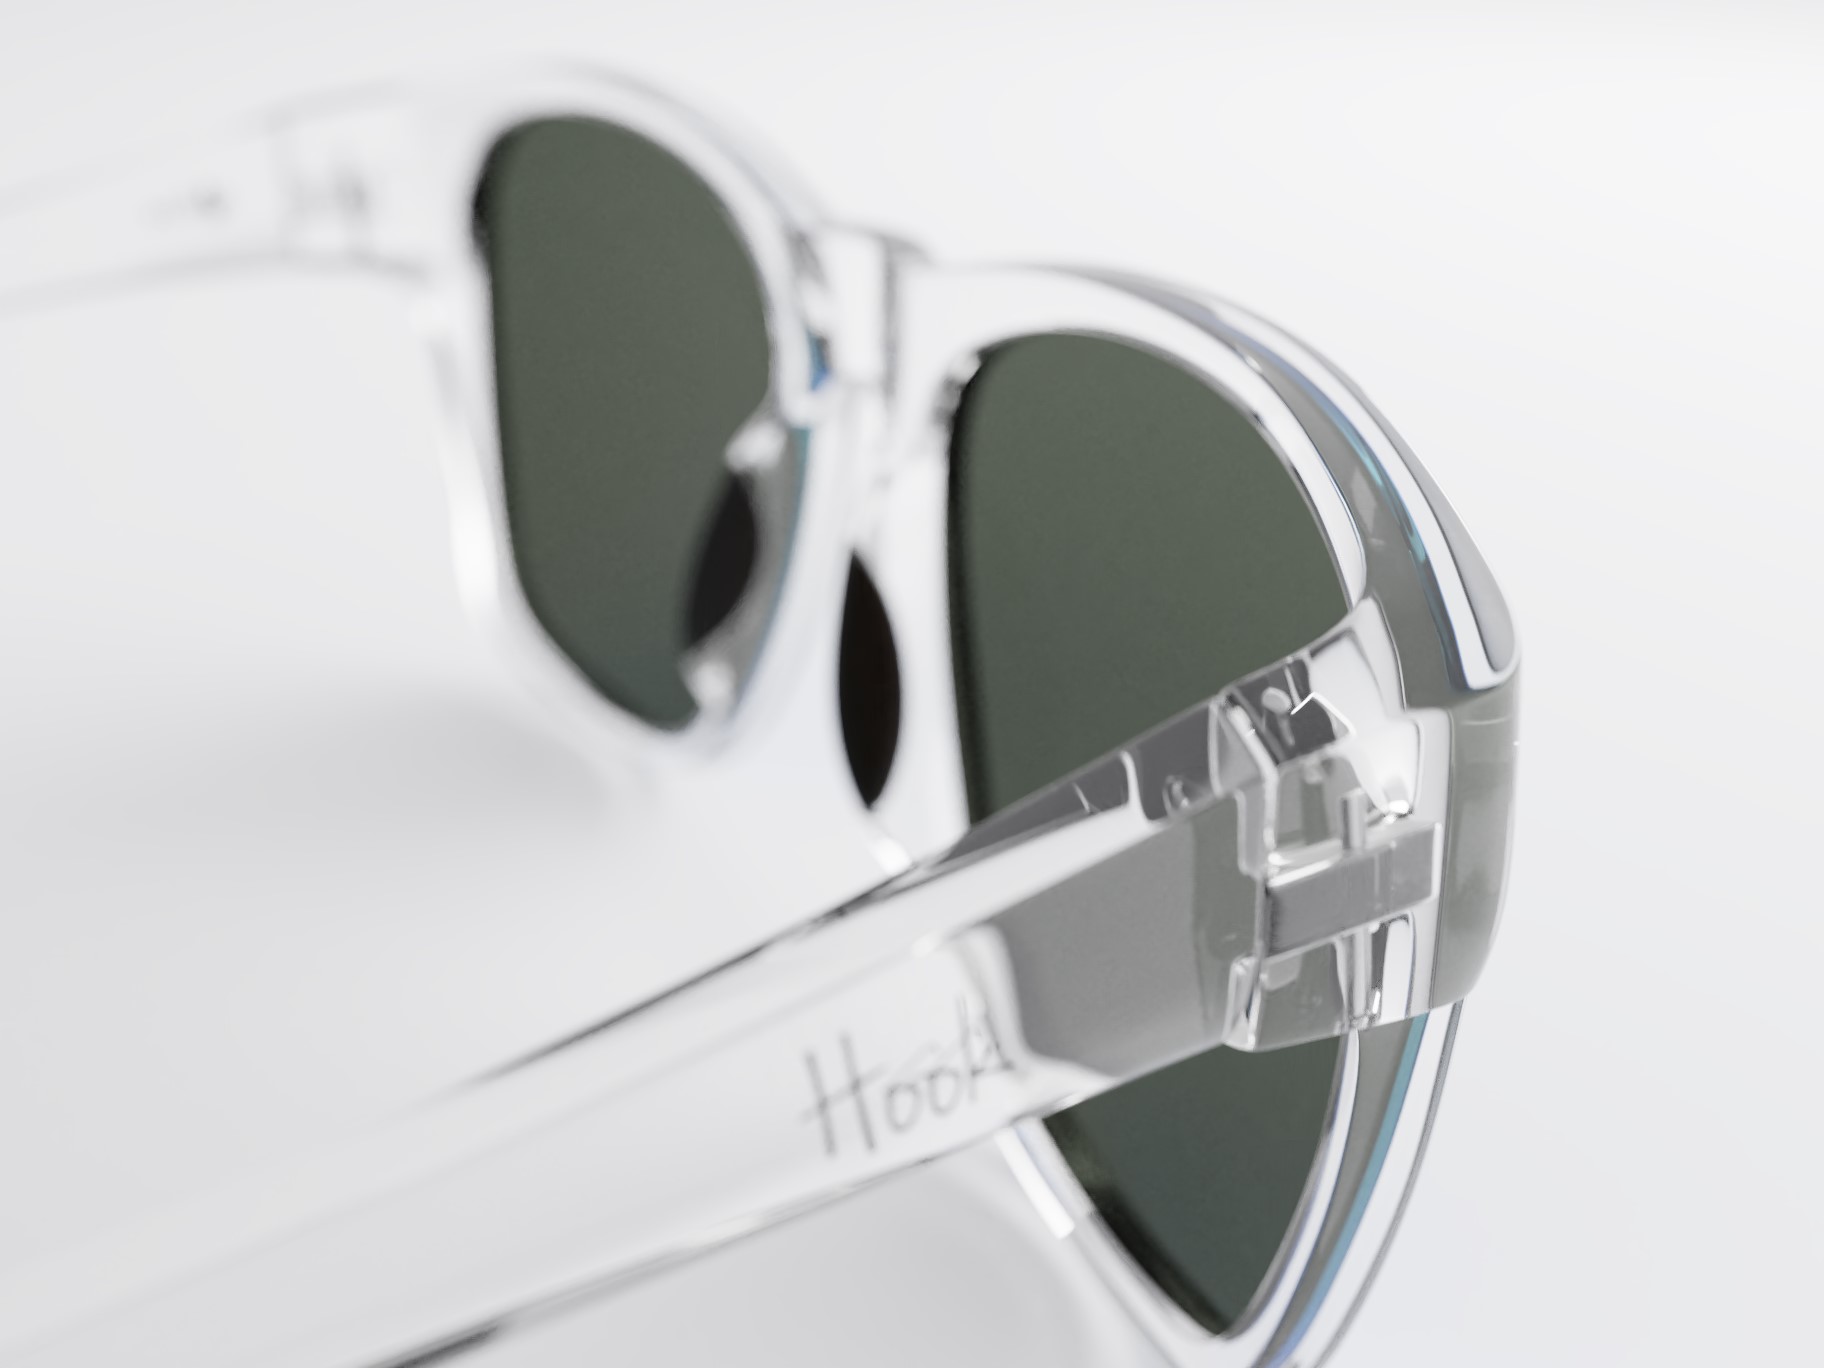 Glasses hinge detail close-up